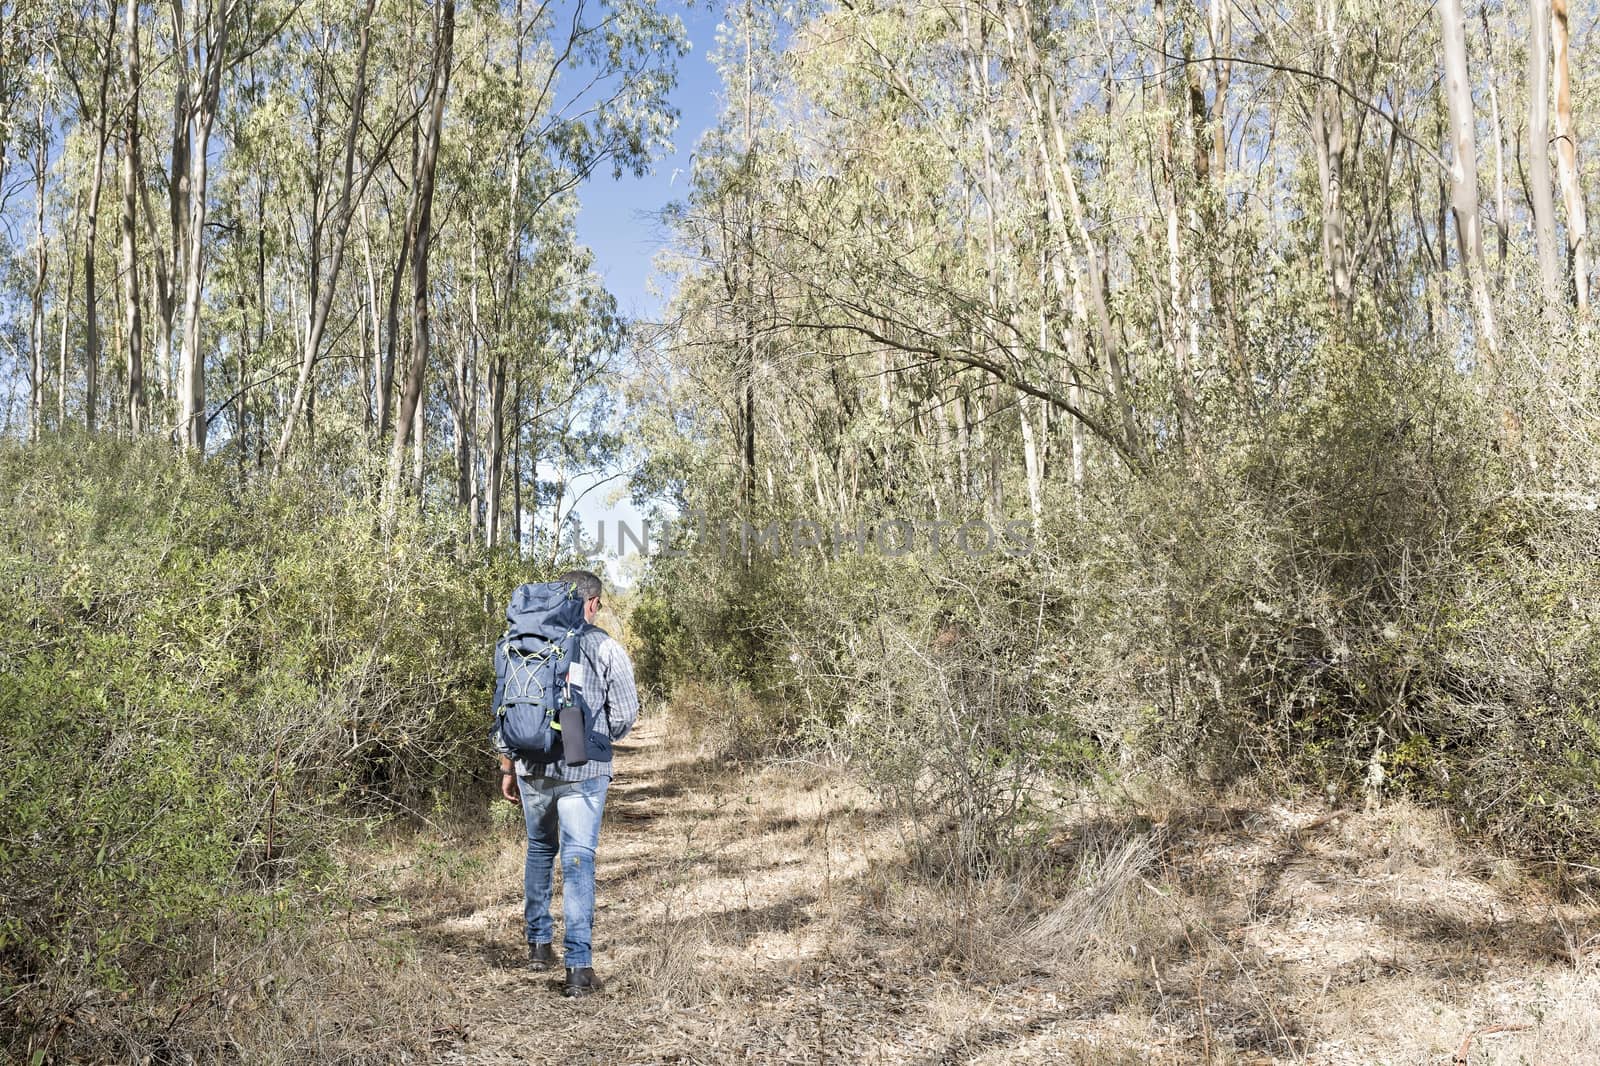 Hiker in the Sardinian eucalyptus forest.